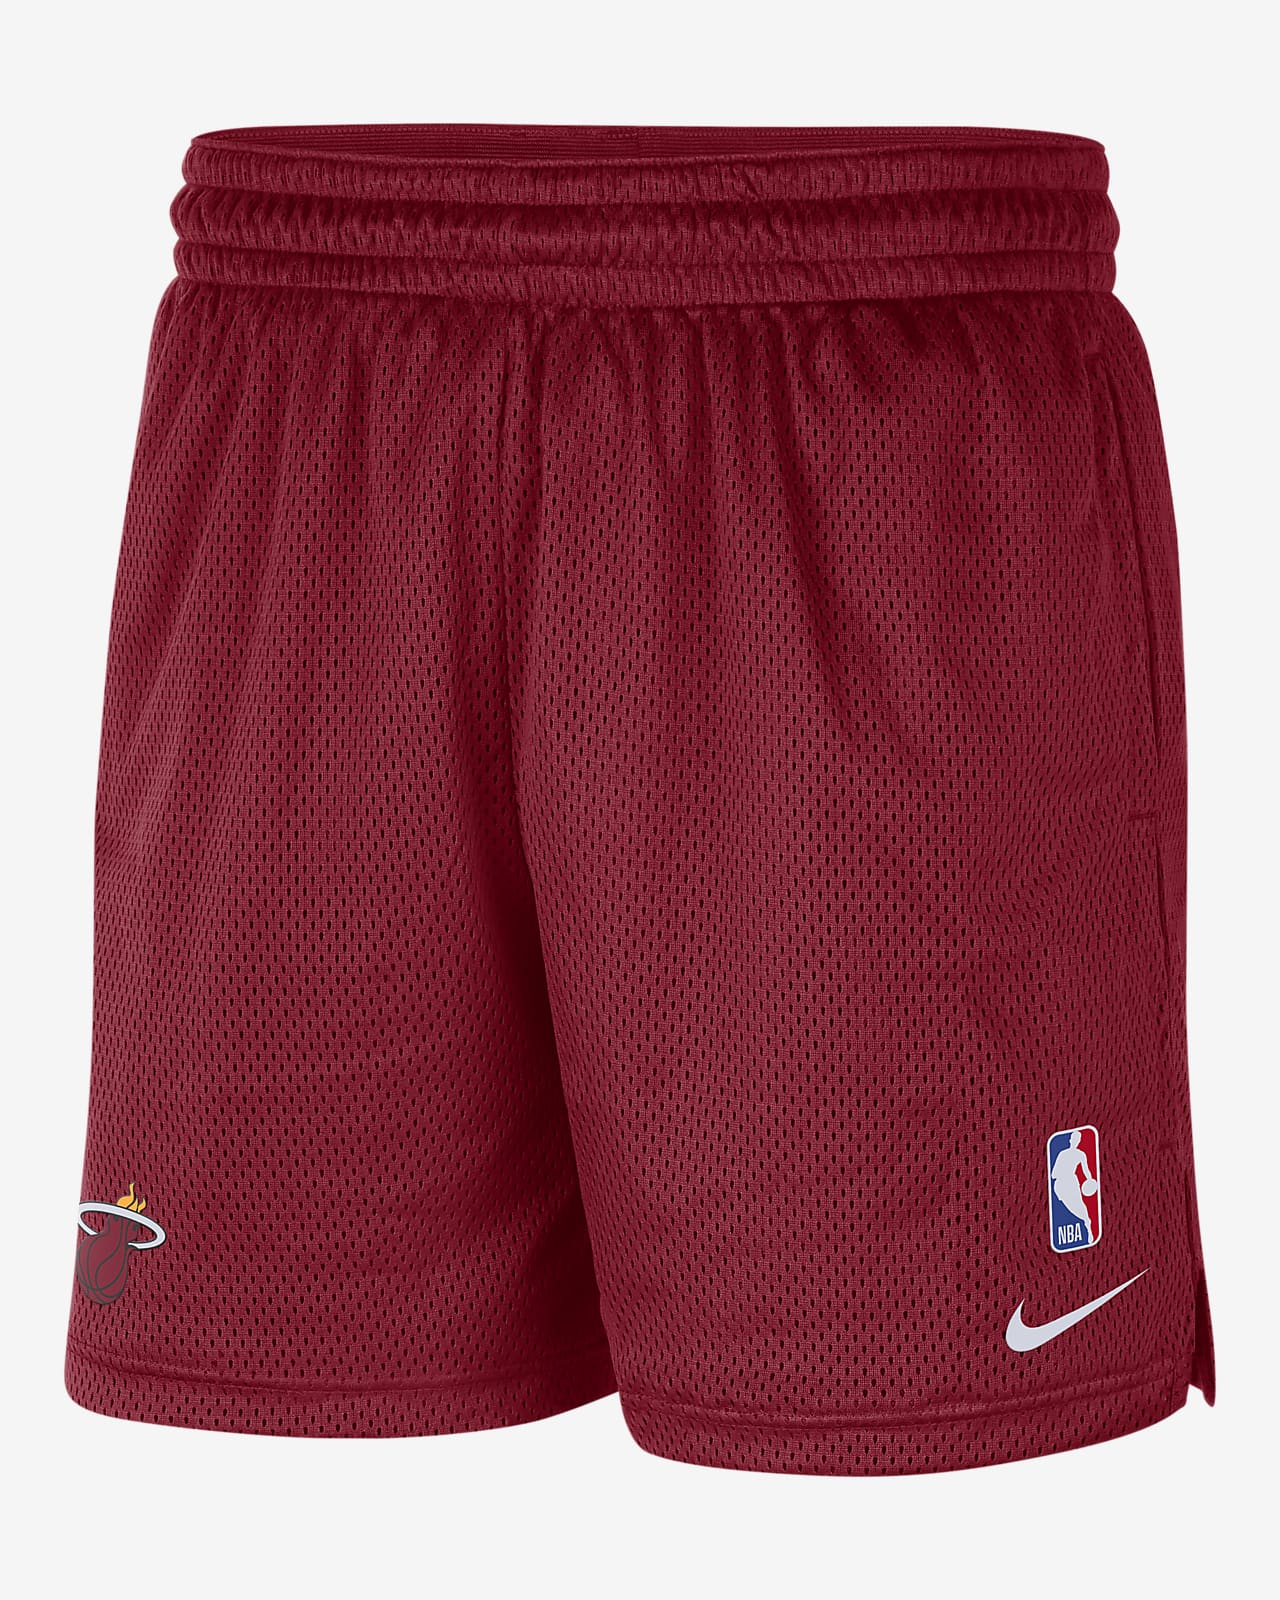 Miami Heat Men's Nike NBA Shorts